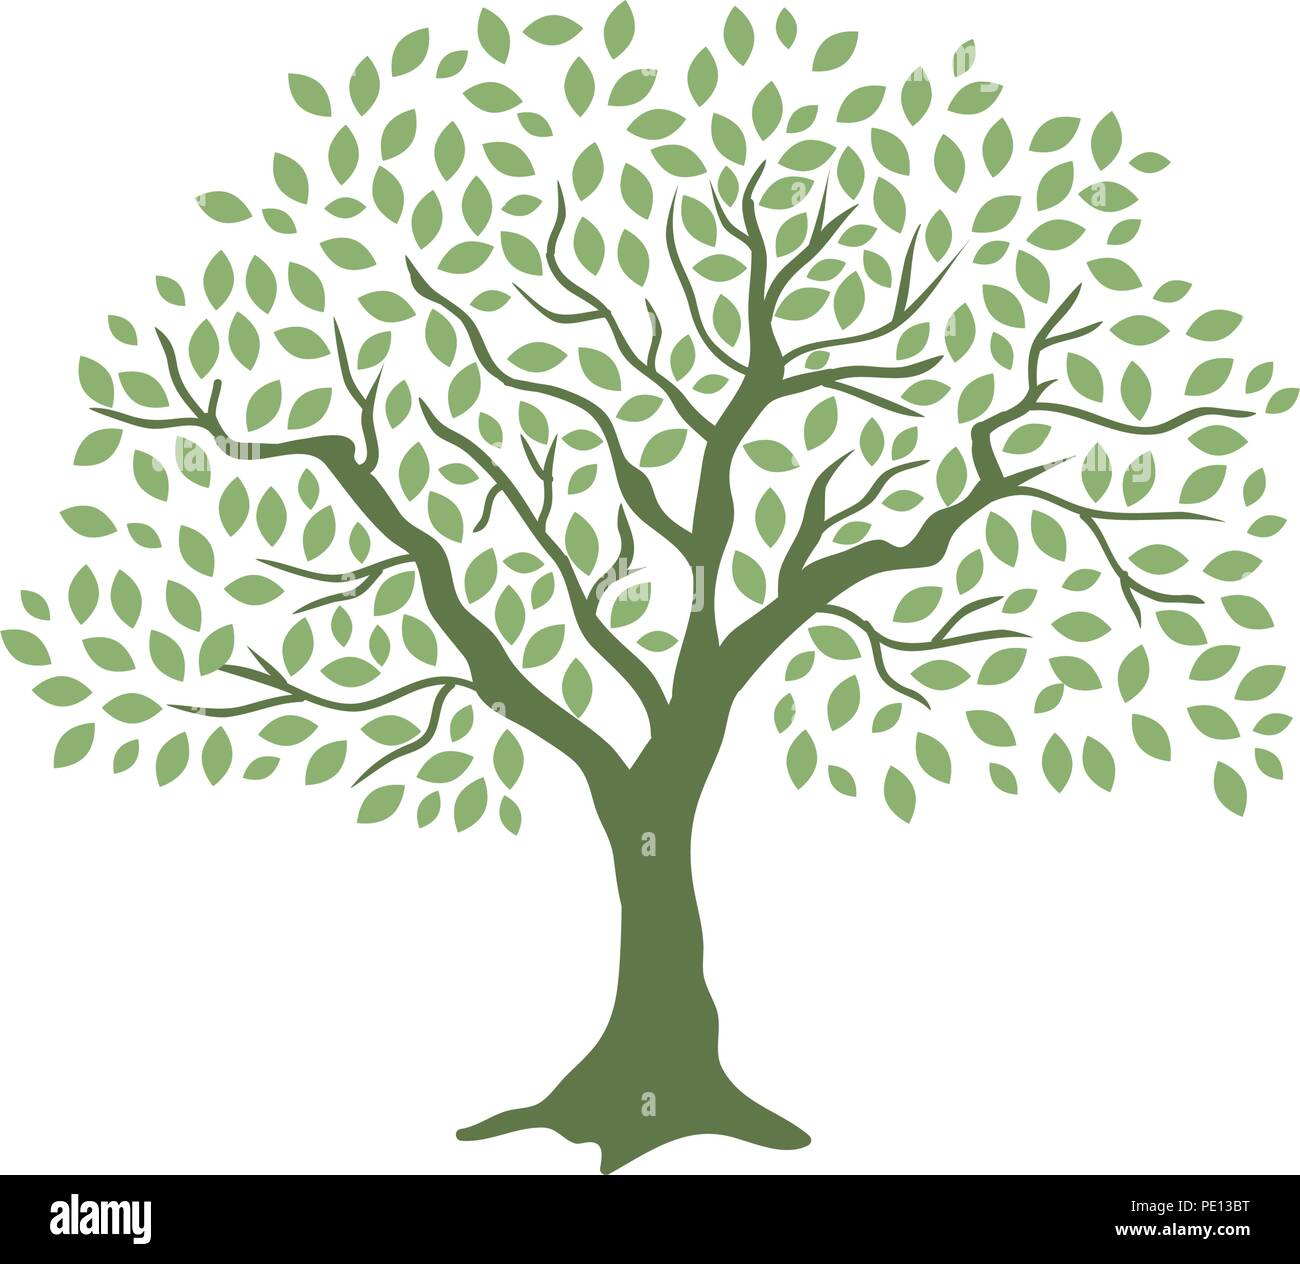 Baum Des Lebens Stock Vektorgrafik Alamy